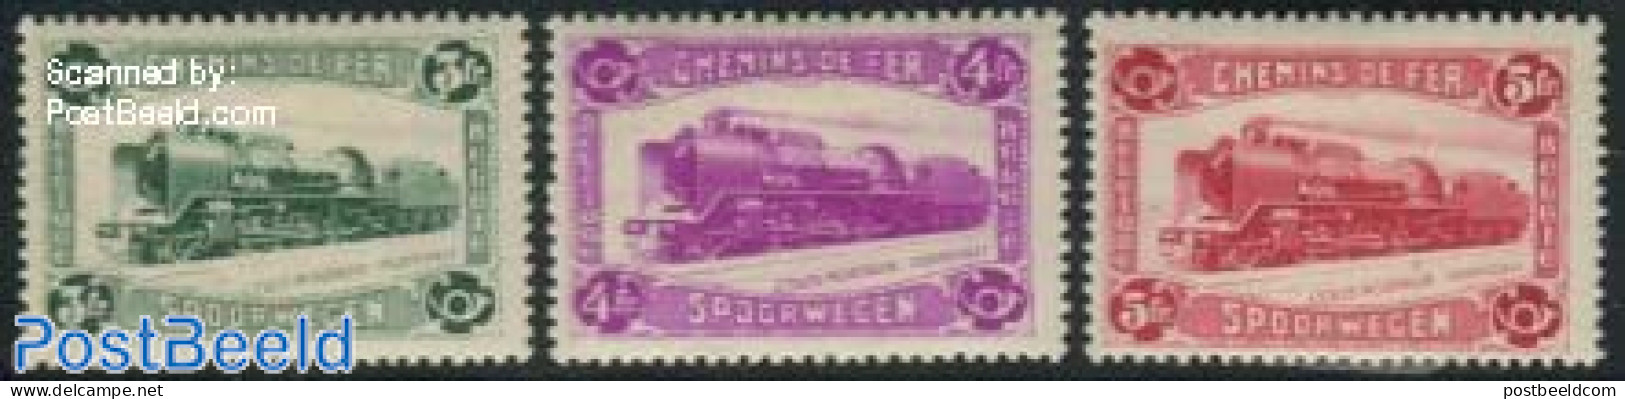 Belgium 1934 Parcel Stamps 3v, Unused (hinged), Transport - Railways - Nuevos